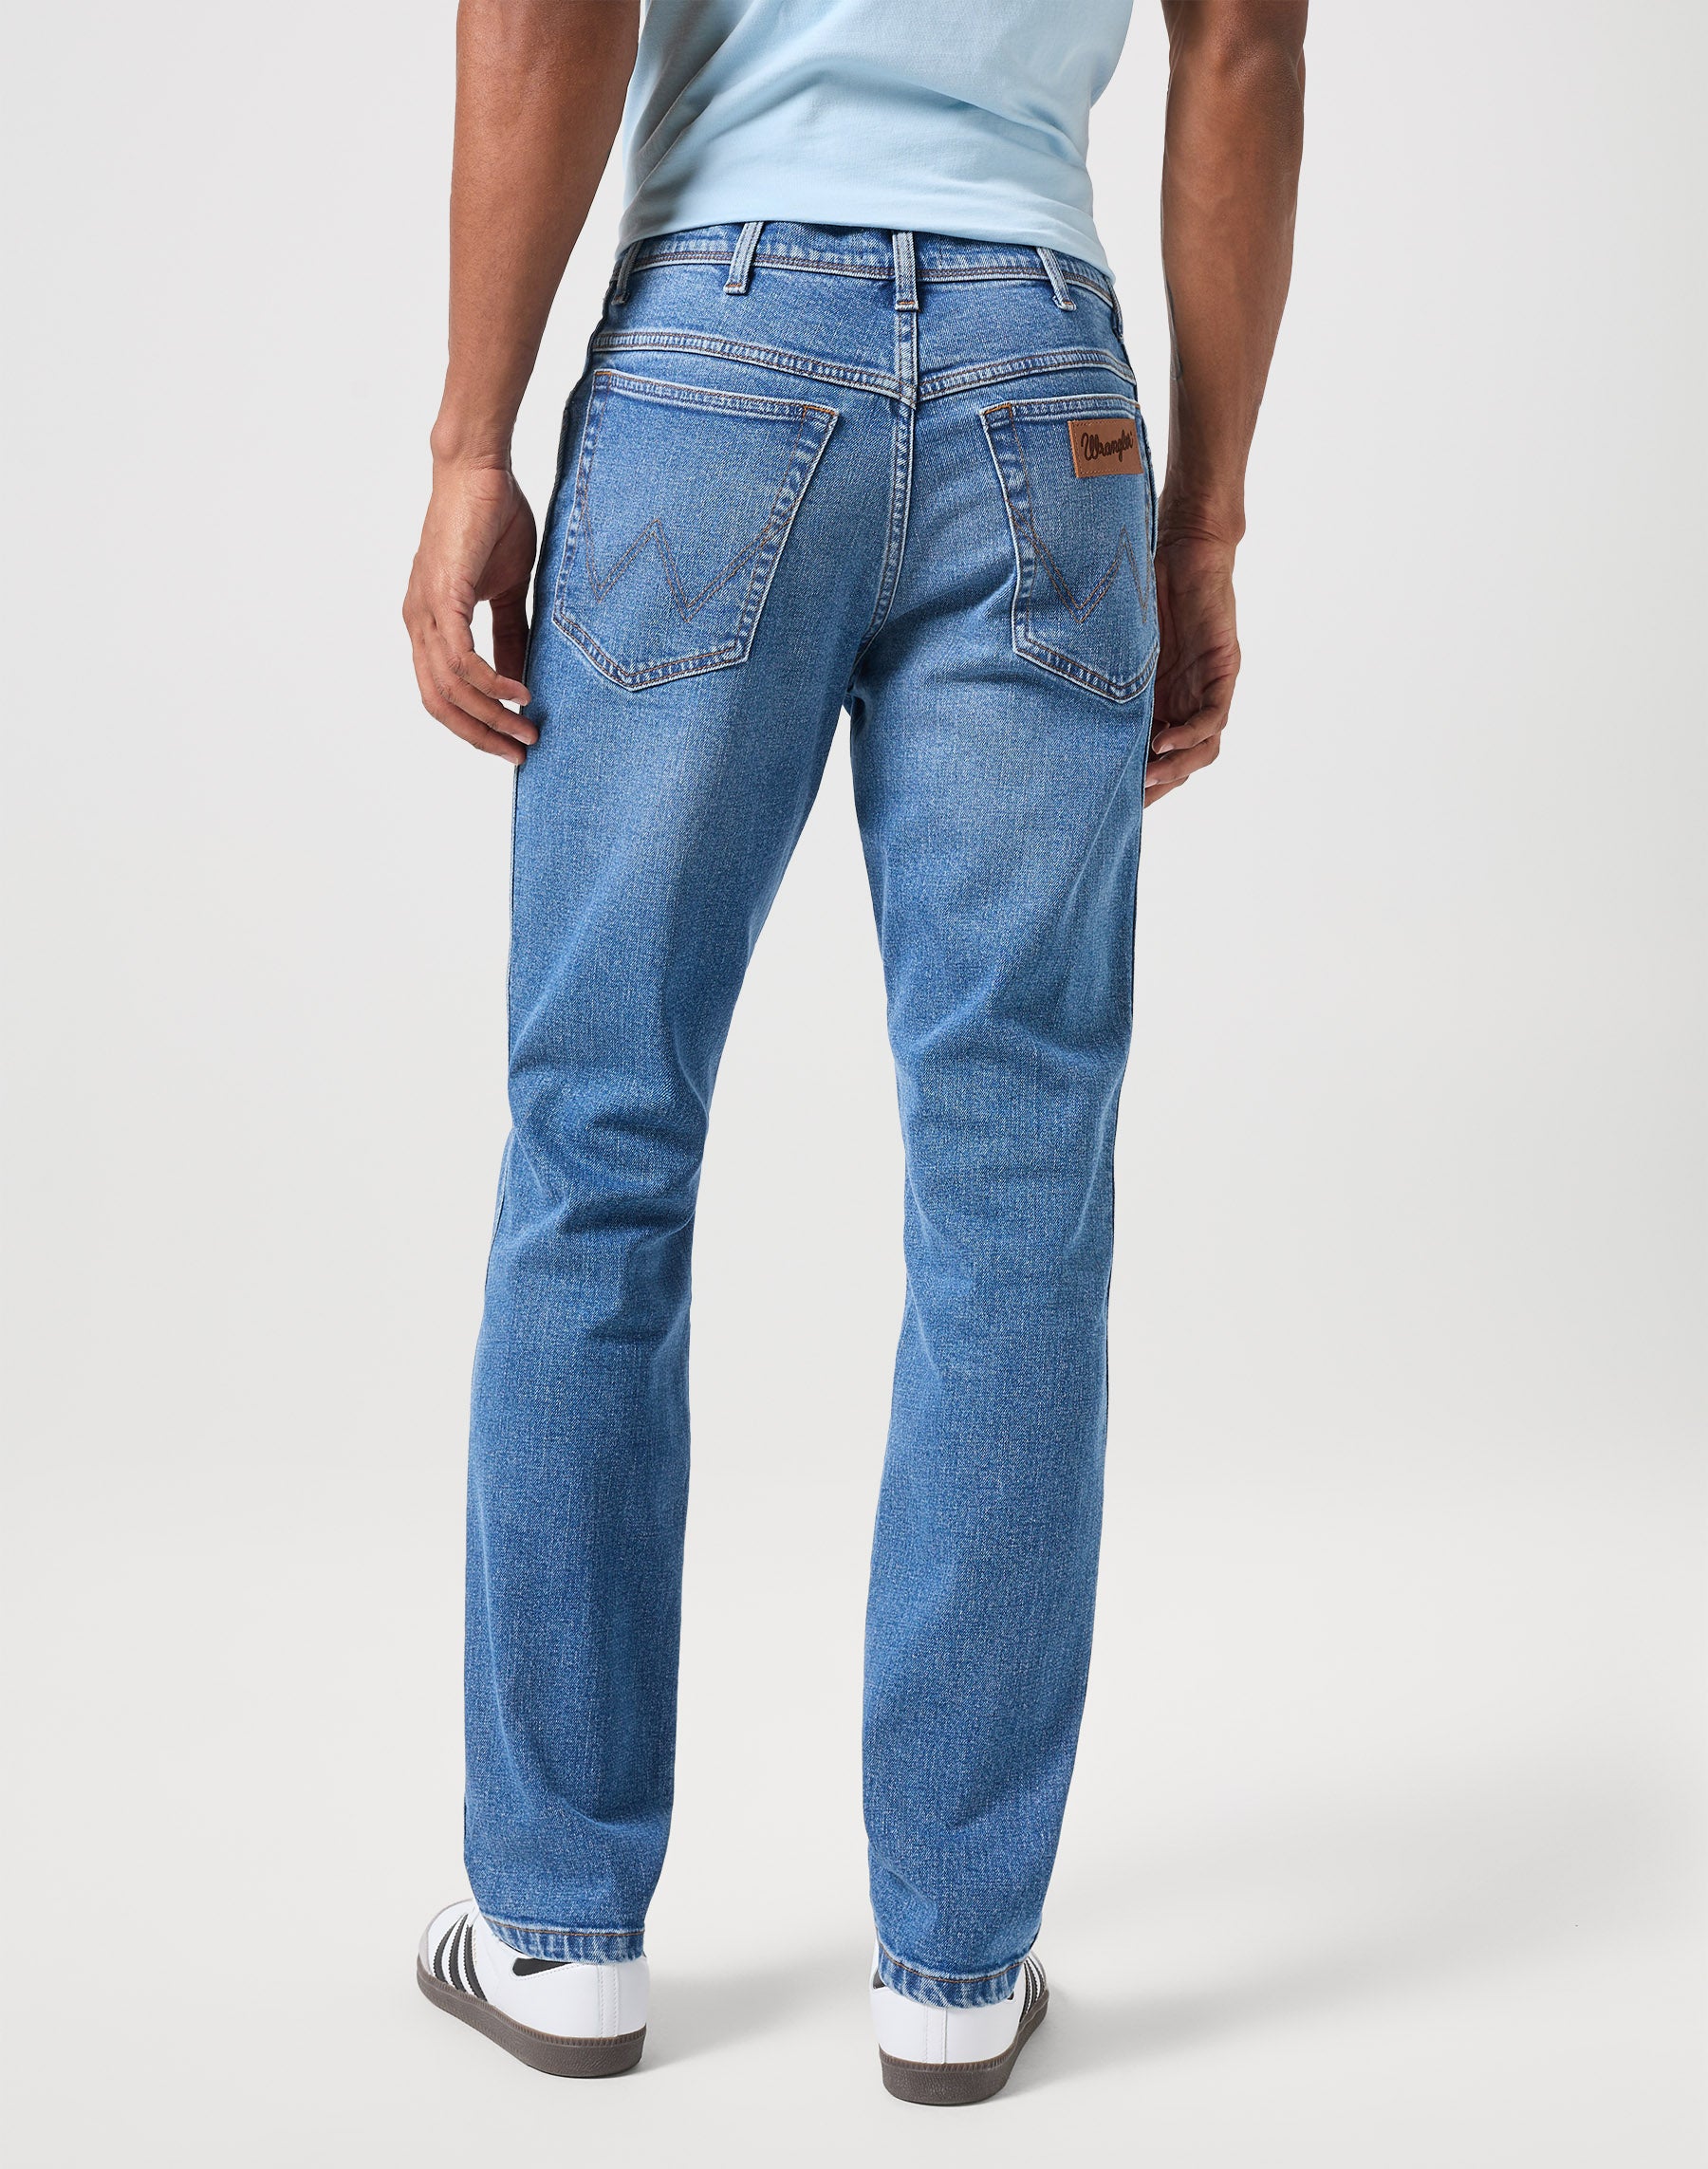 Texas Slim Low Stretch in Guardian Jeans Wrangler   